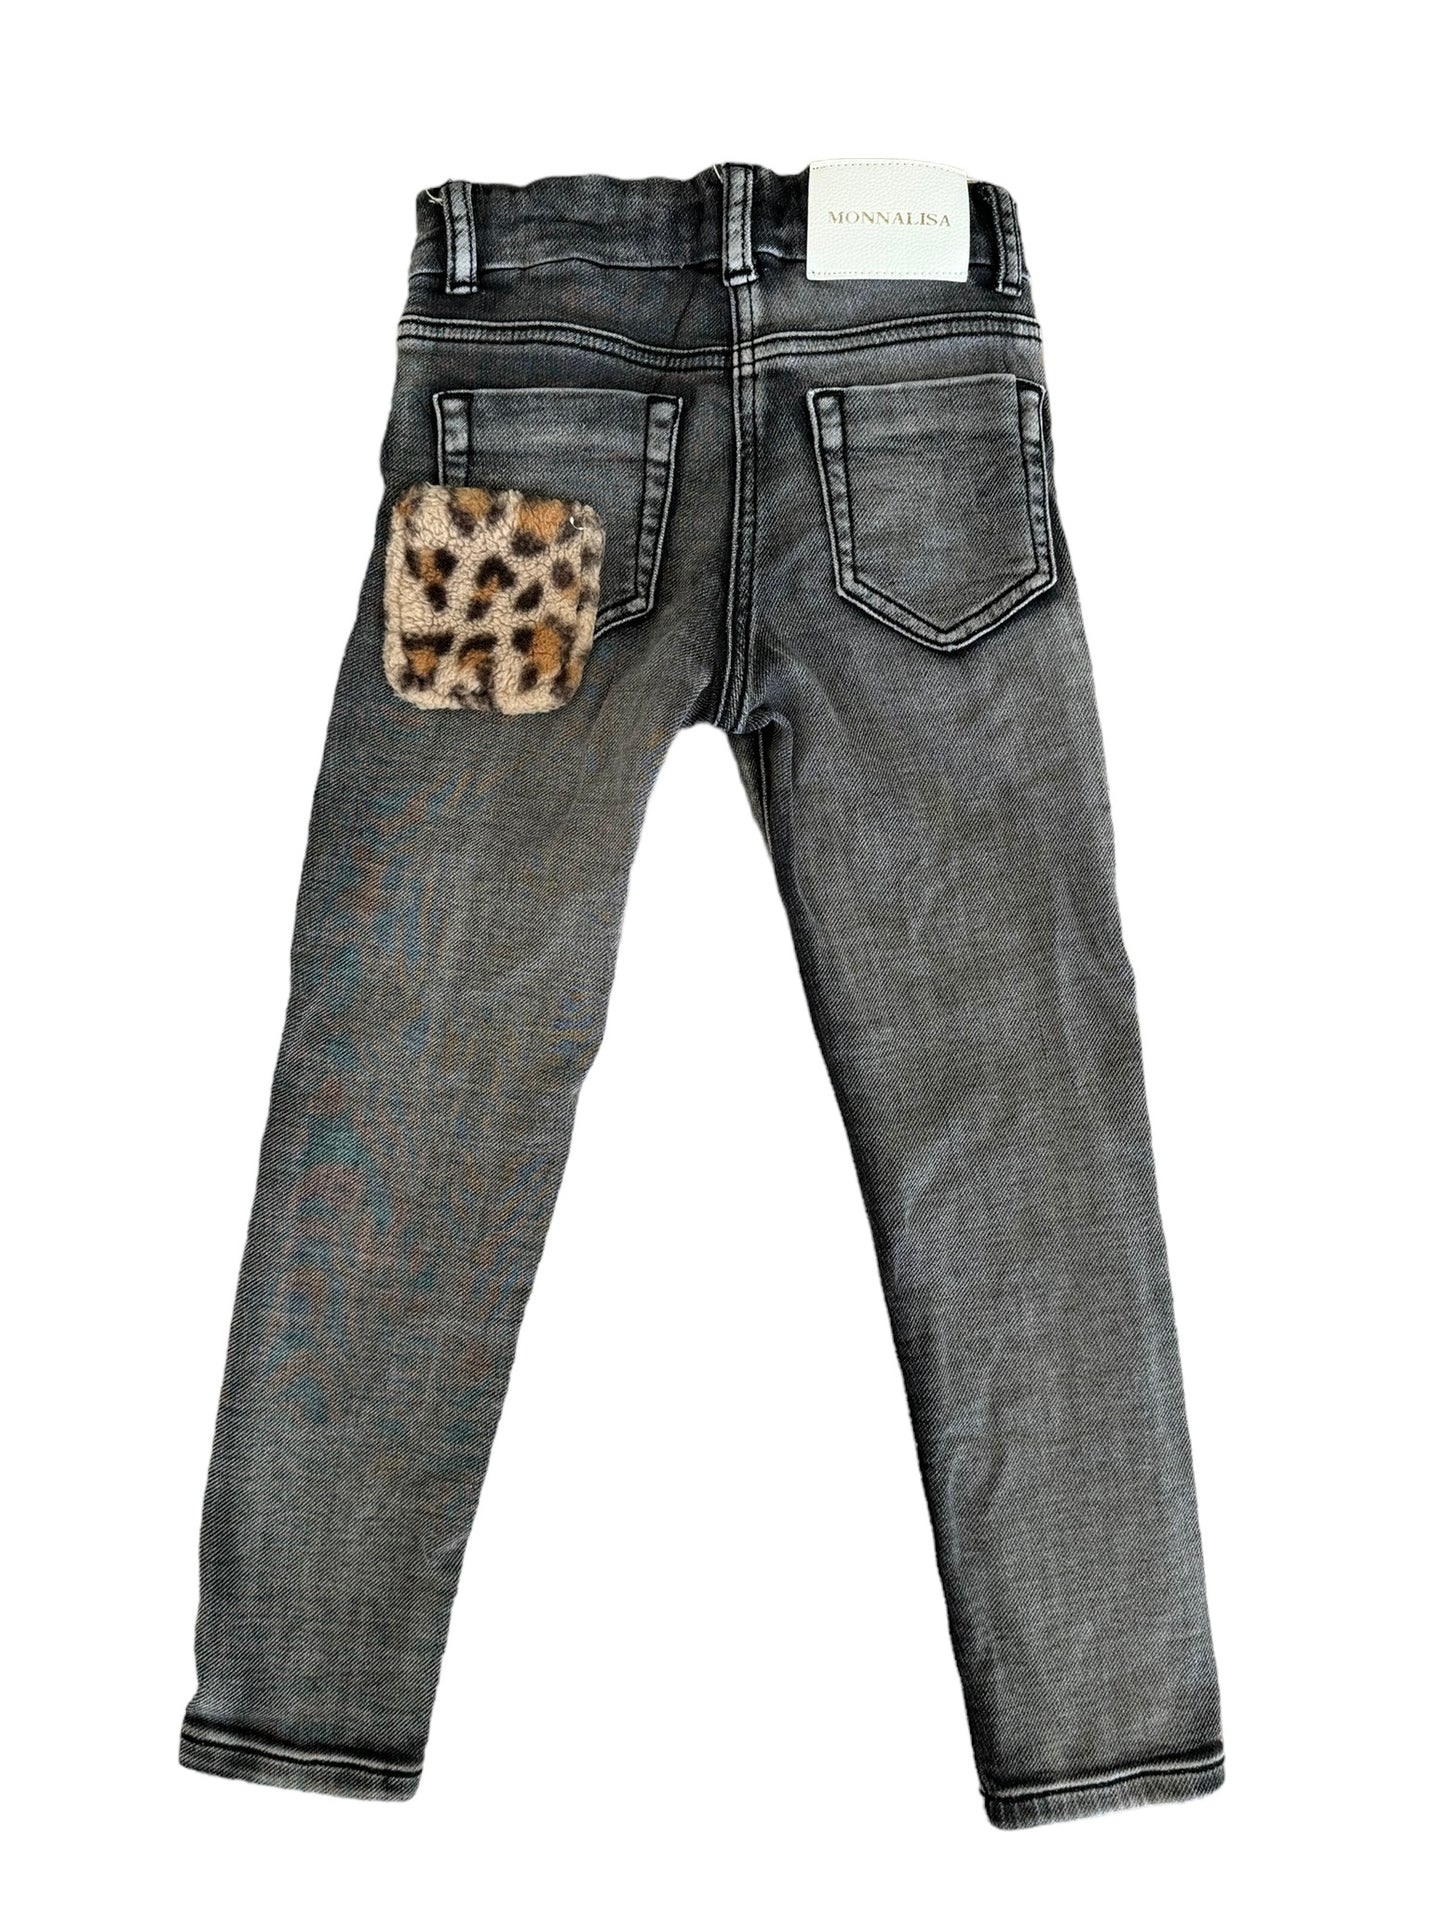 Monnalisa Girls Skinny Jeans Adjustable Waist Size 6